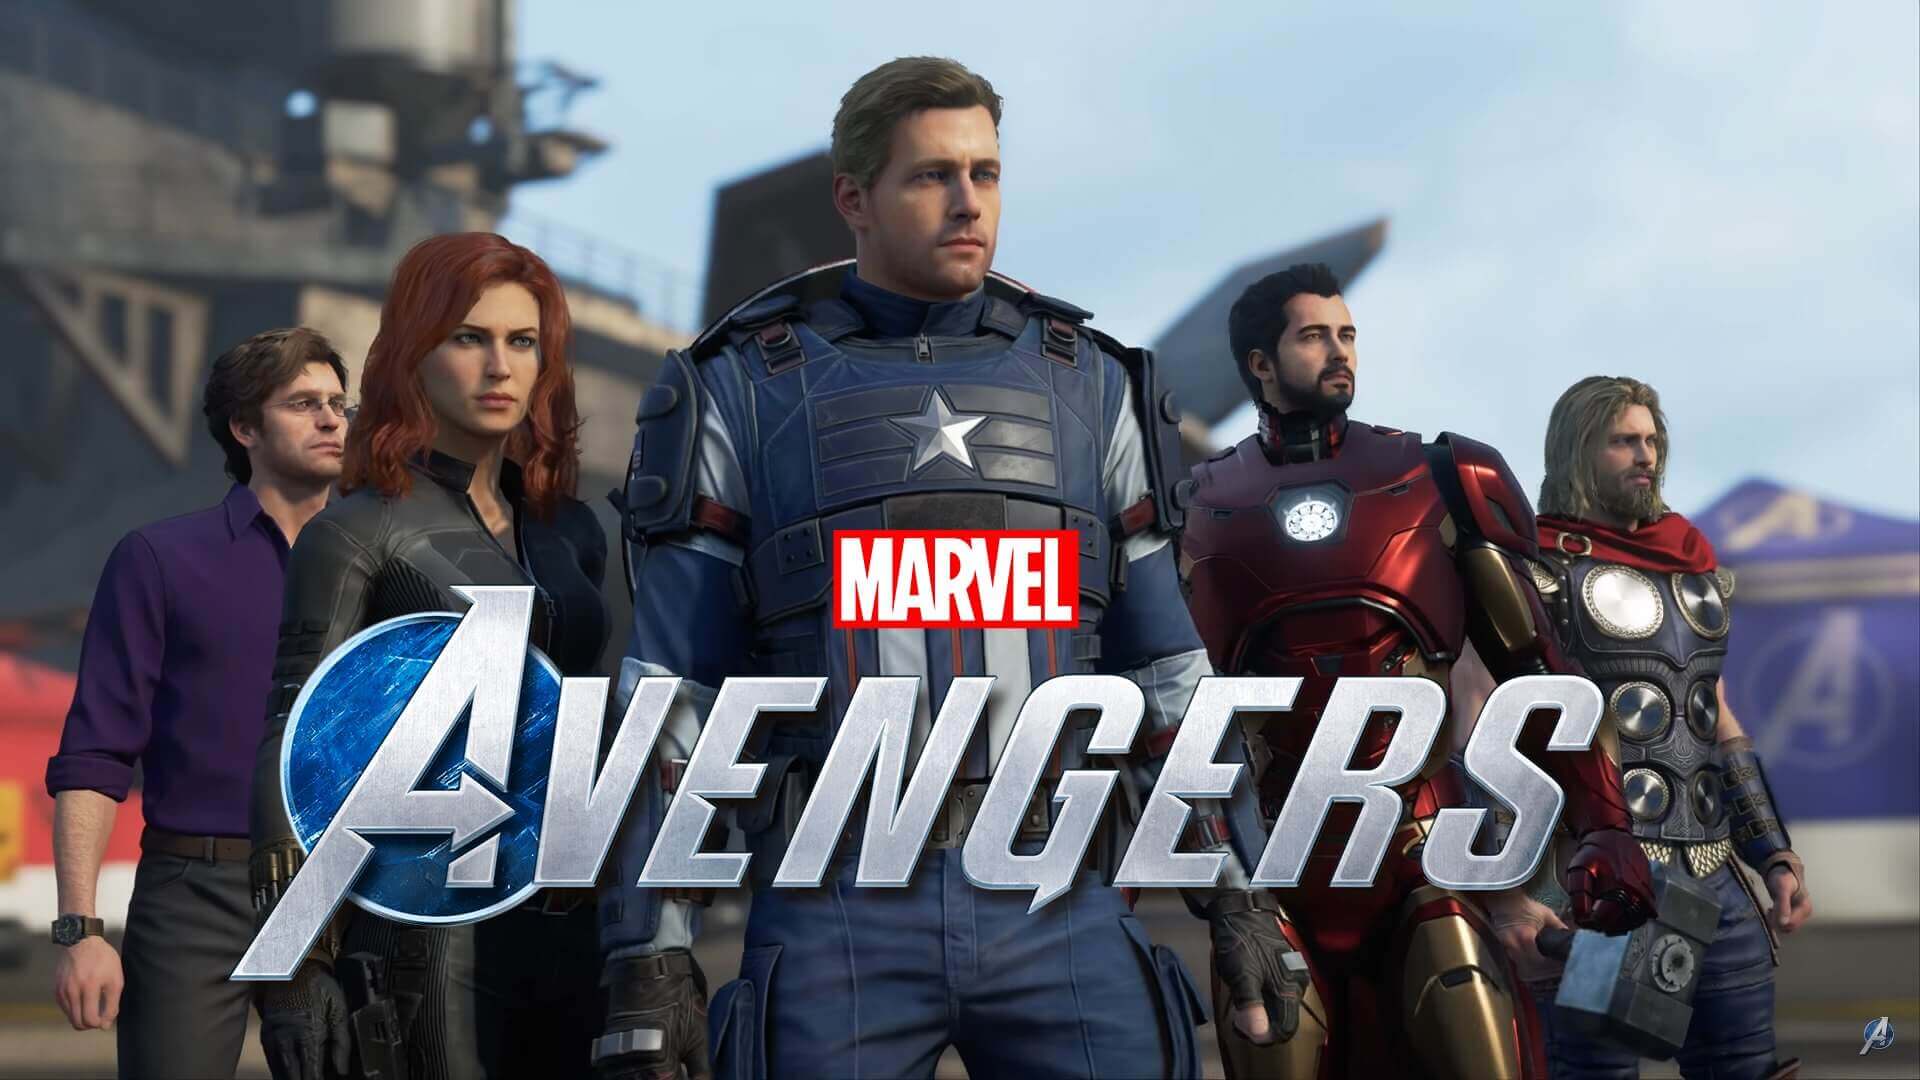 بازی Marvel's Avengers